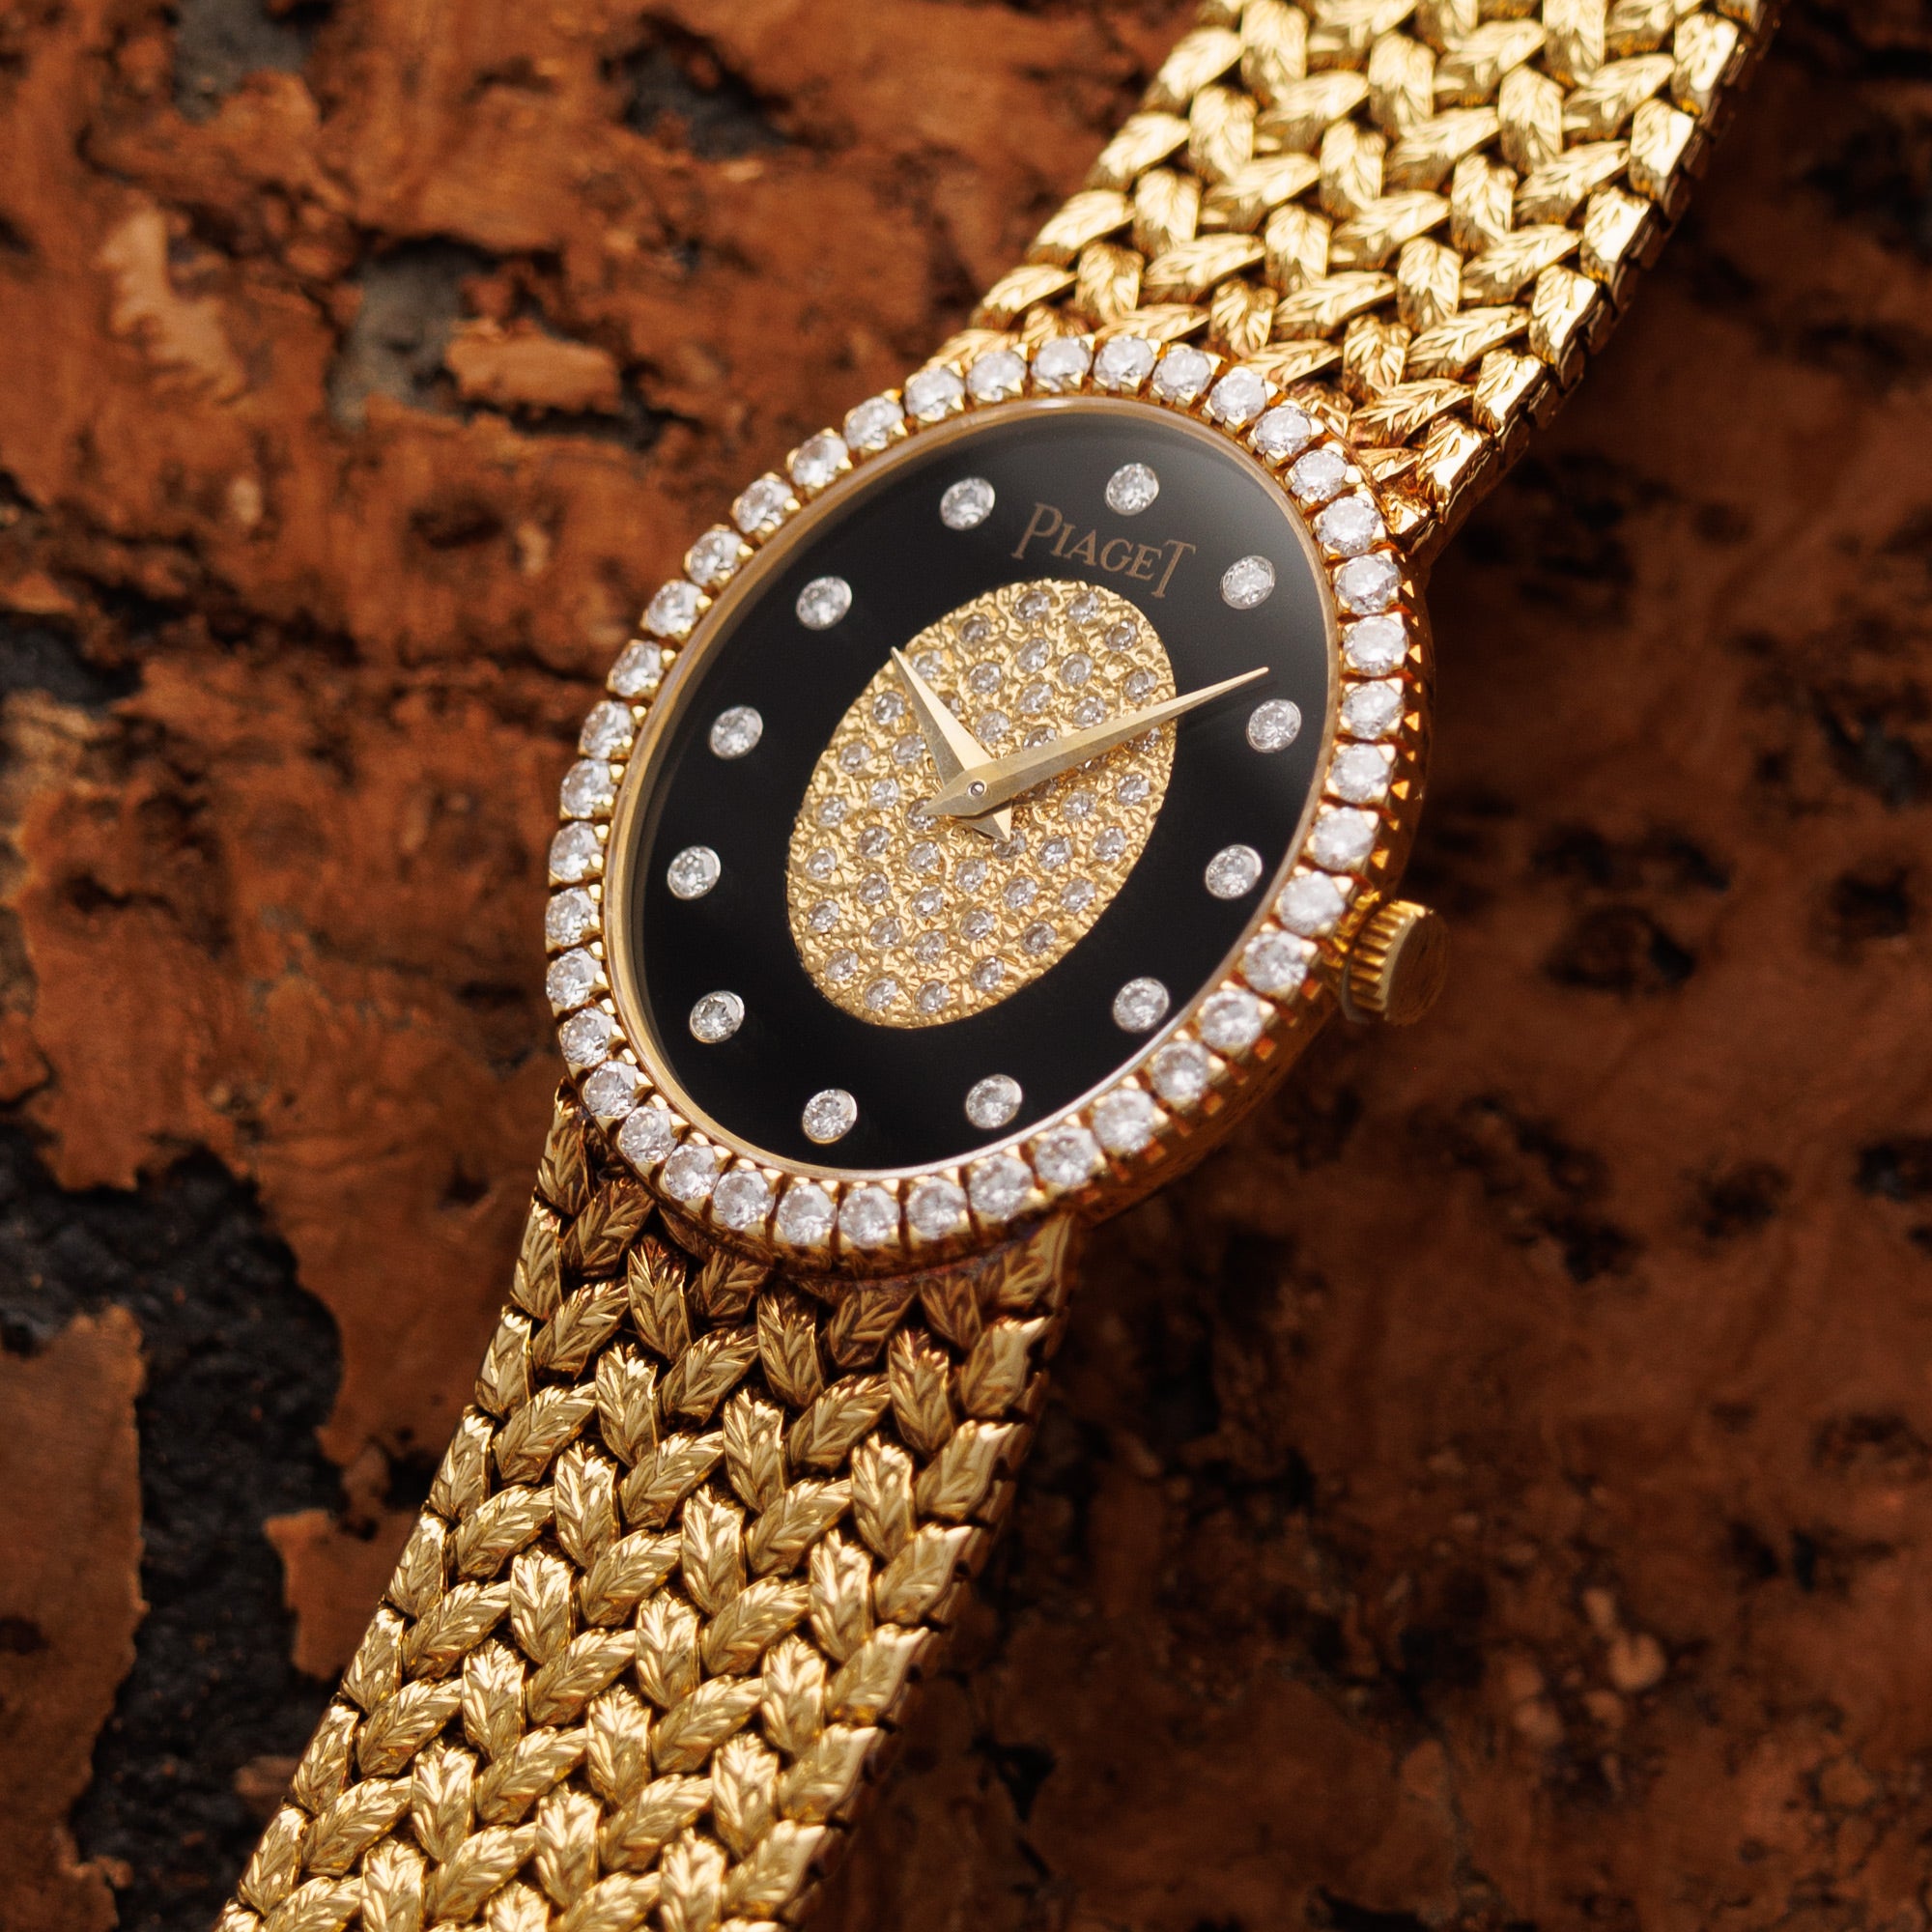 Piaget - Piaget Yellow Gold, Onyx and Diamond Watch Ref. 9826 - The Keystone Watches